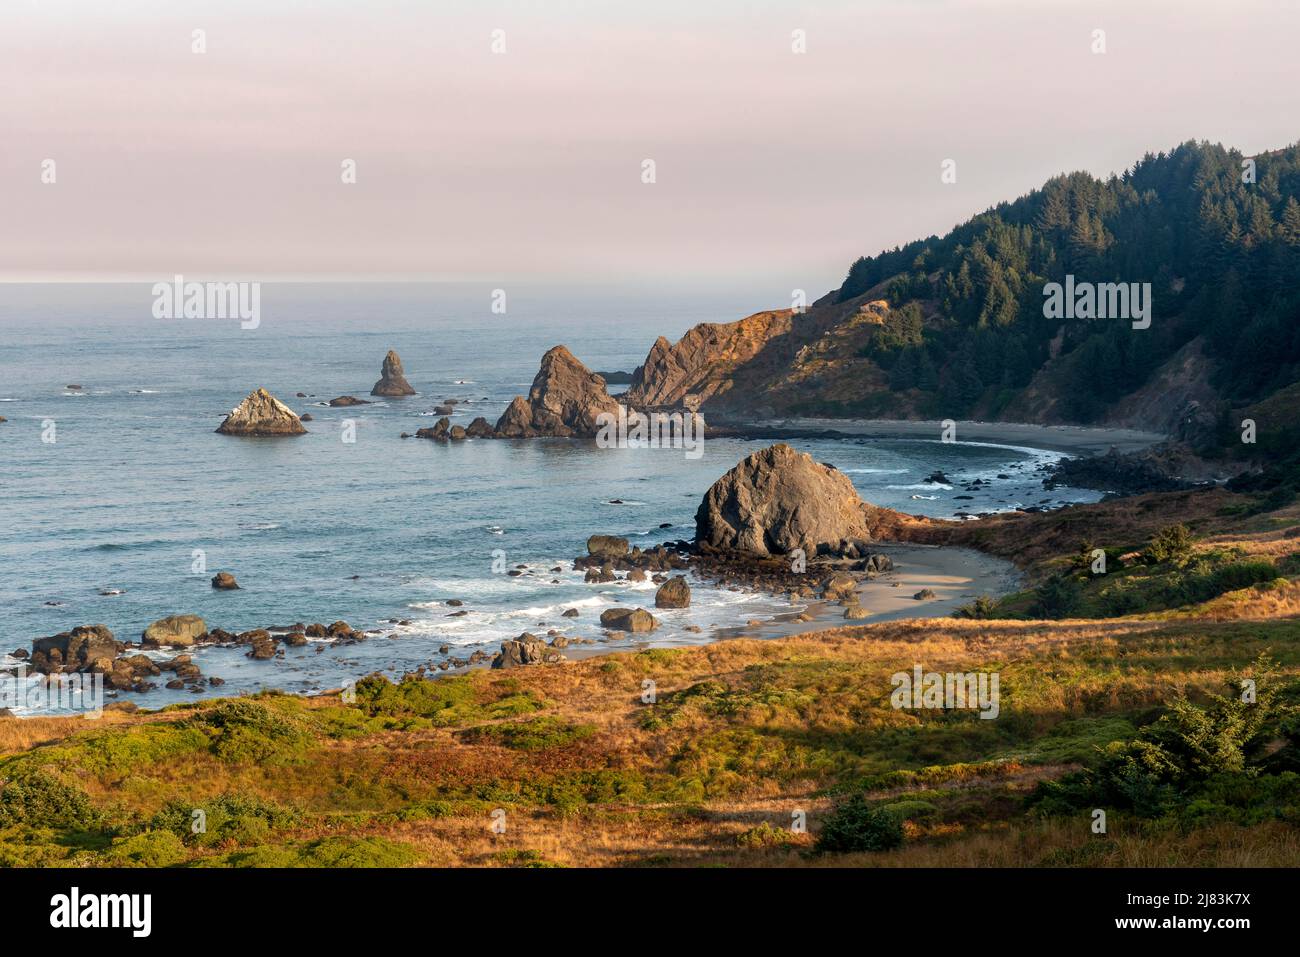 Ragged coast with rocks in the sea, Whaleshead, Samuel H. Boardman State Scenic Corridor, Oregon, USA Stock Photo